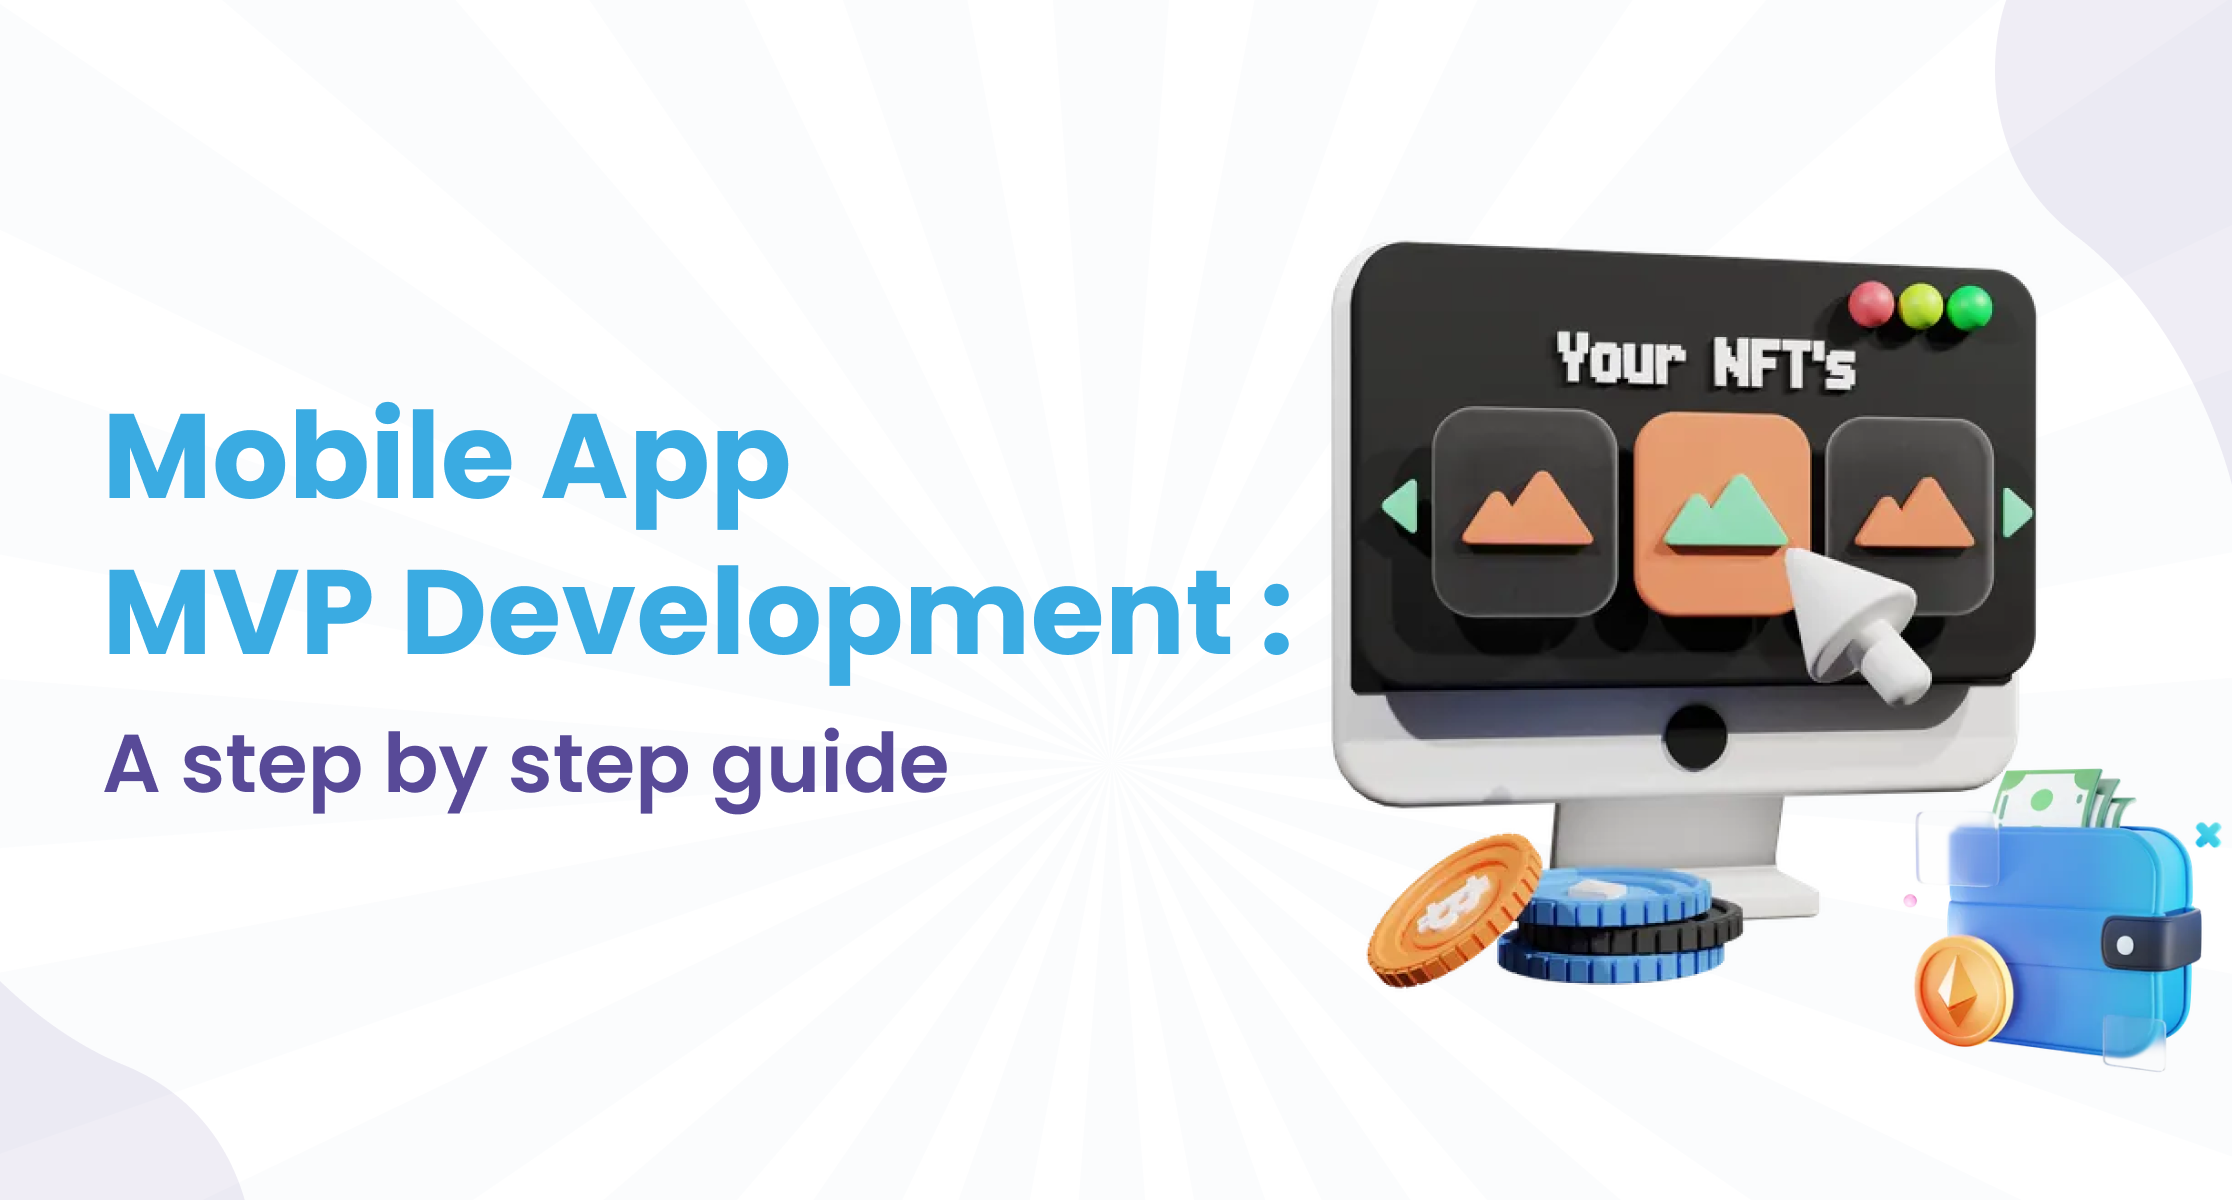 Mobile App MVP Development: A Step-by-Step Guide